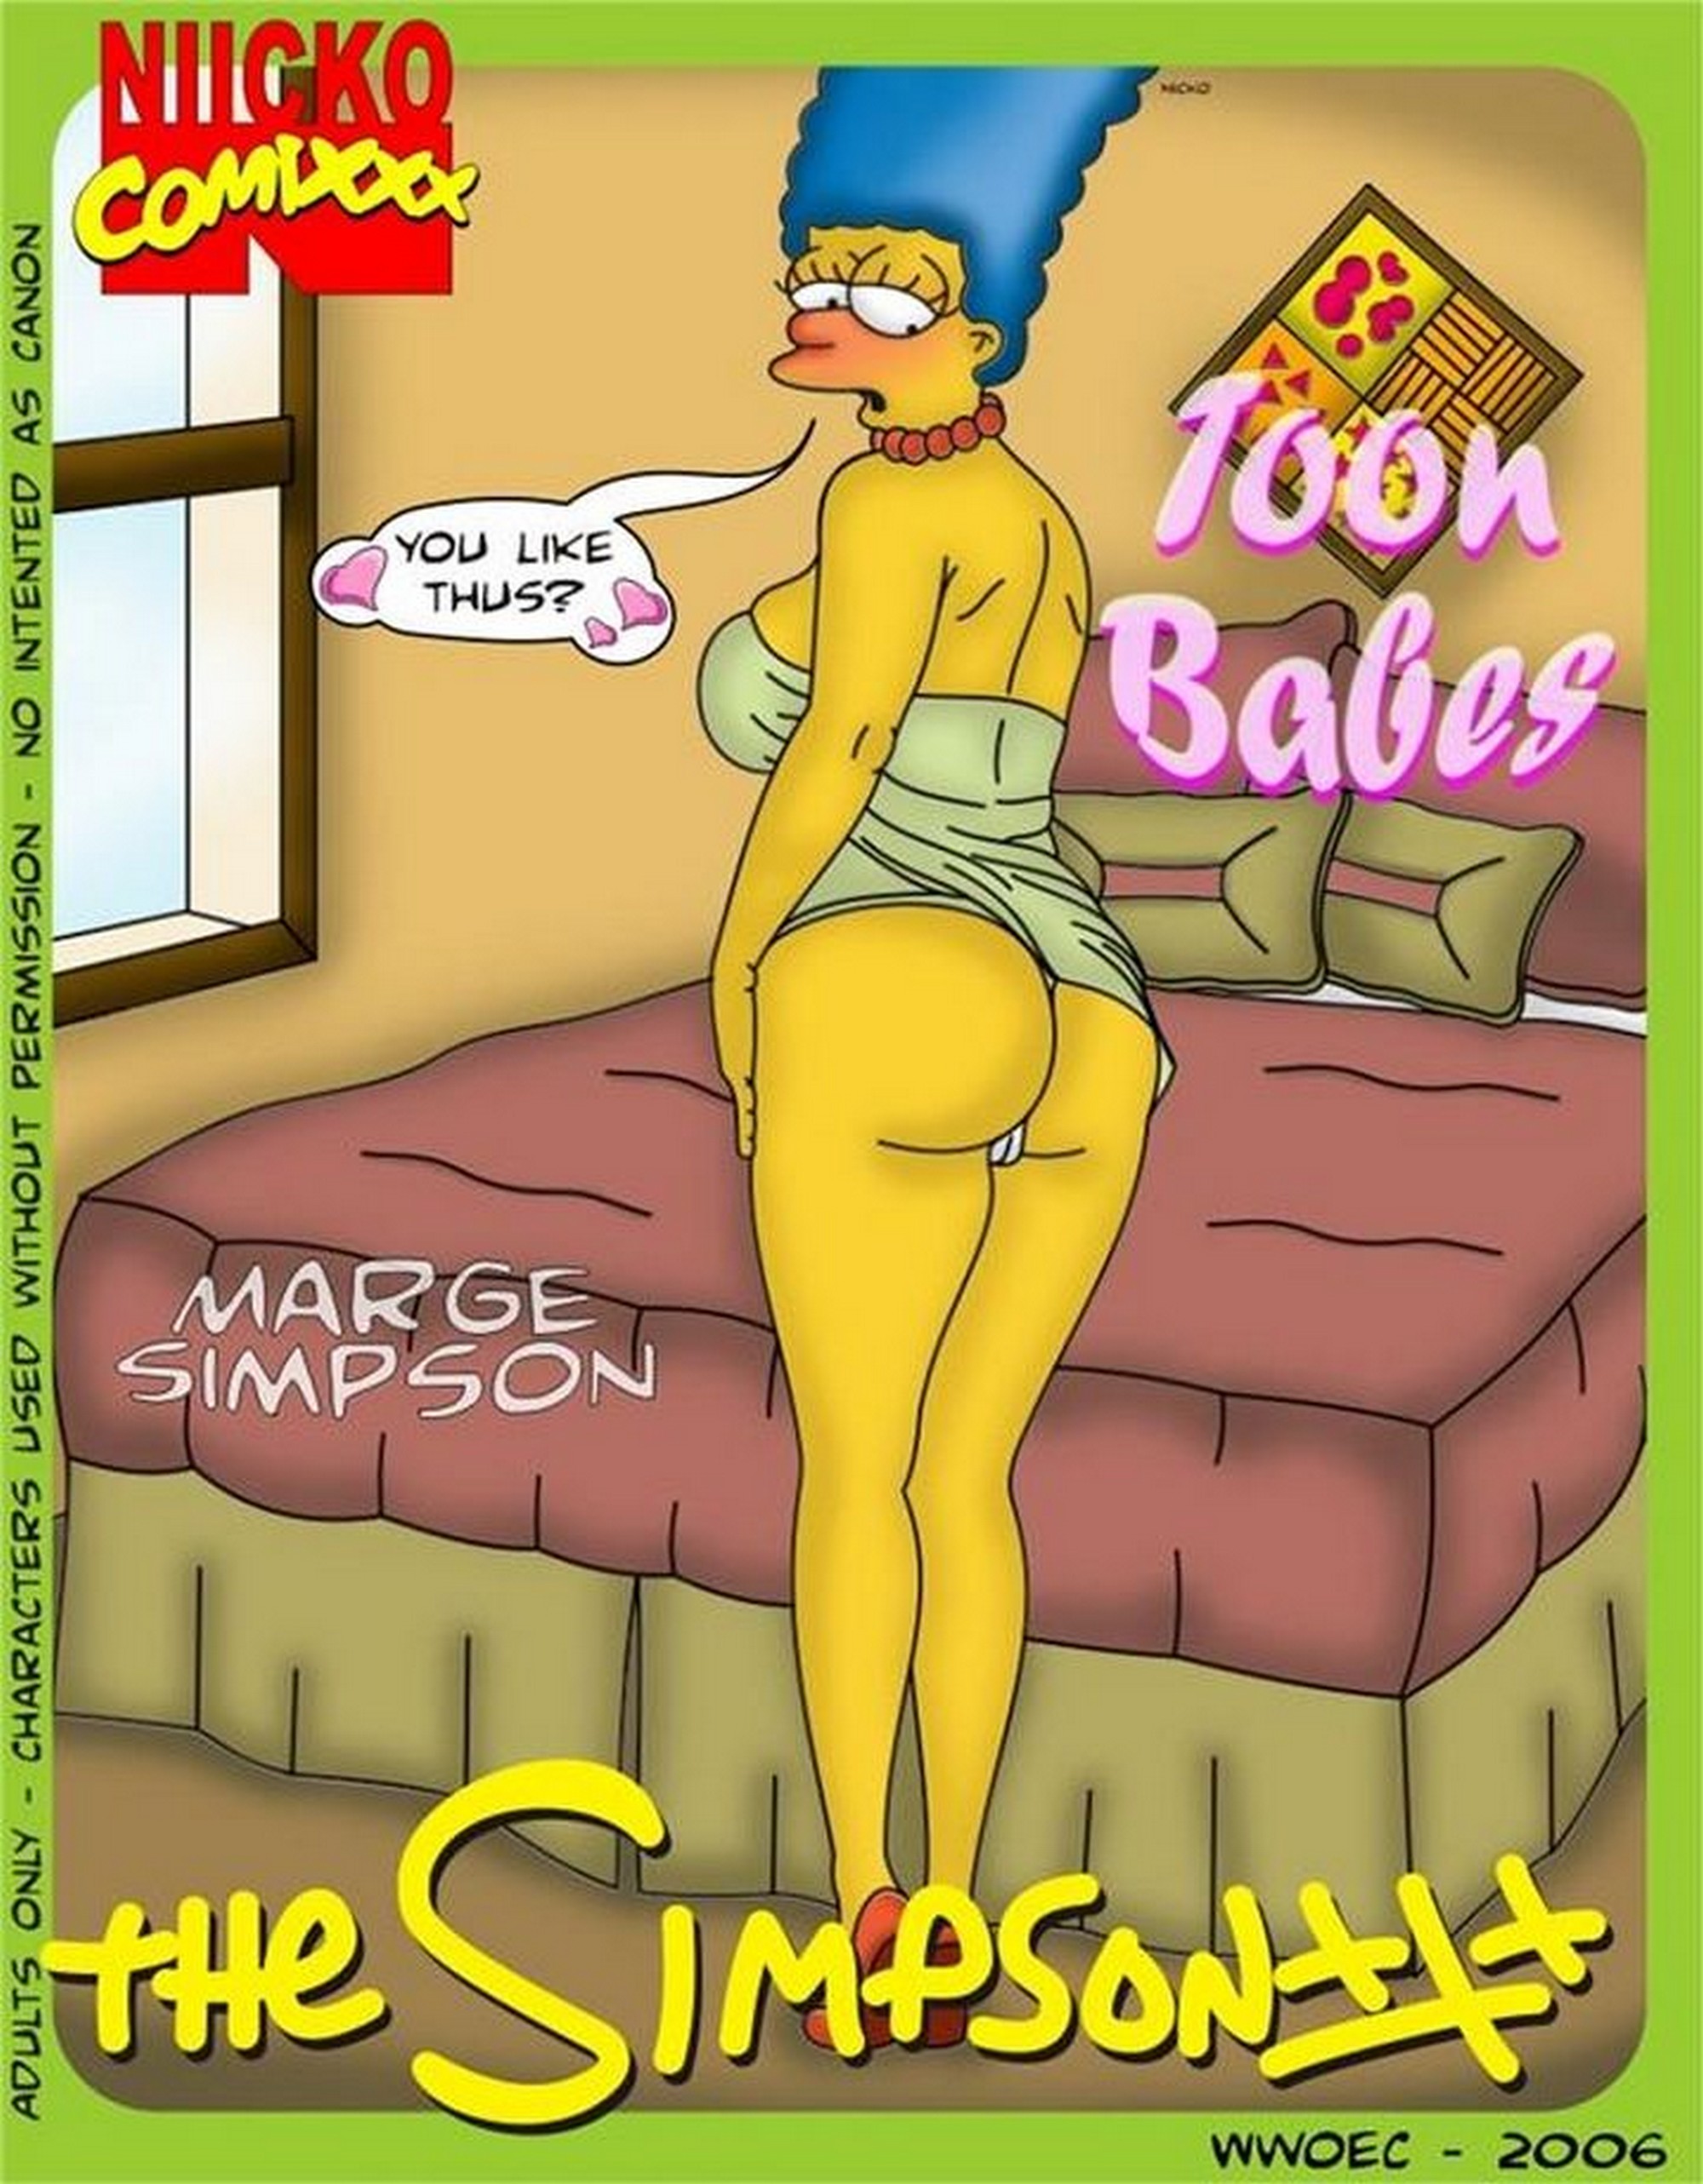 Marge Simpson - Toon Babes - KingComiX.com